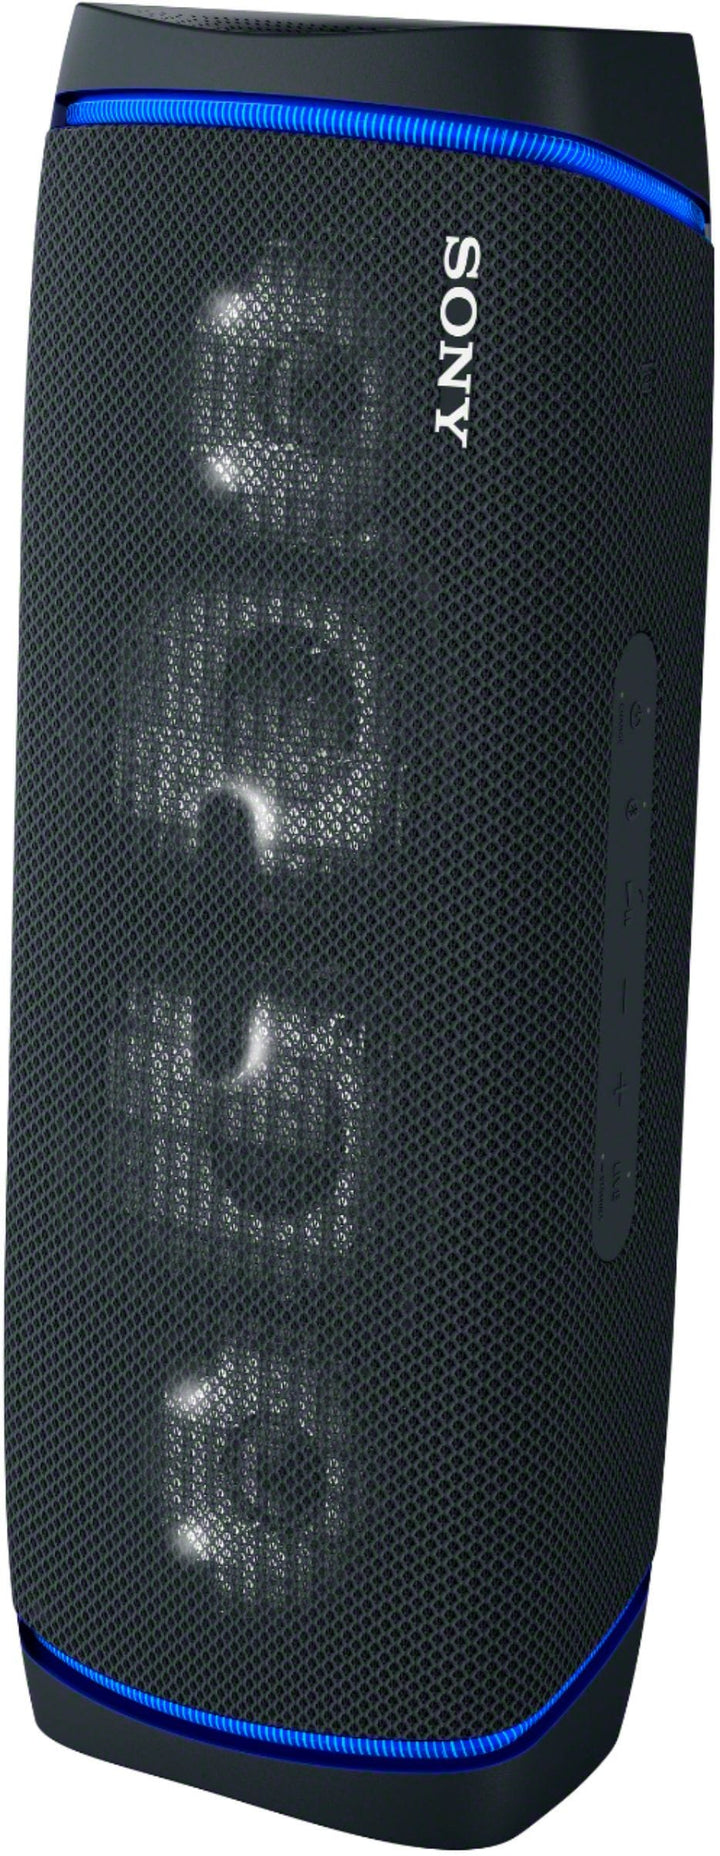 Sony - SRS-XB43 Portable Bluetooth Speaker - Black_4